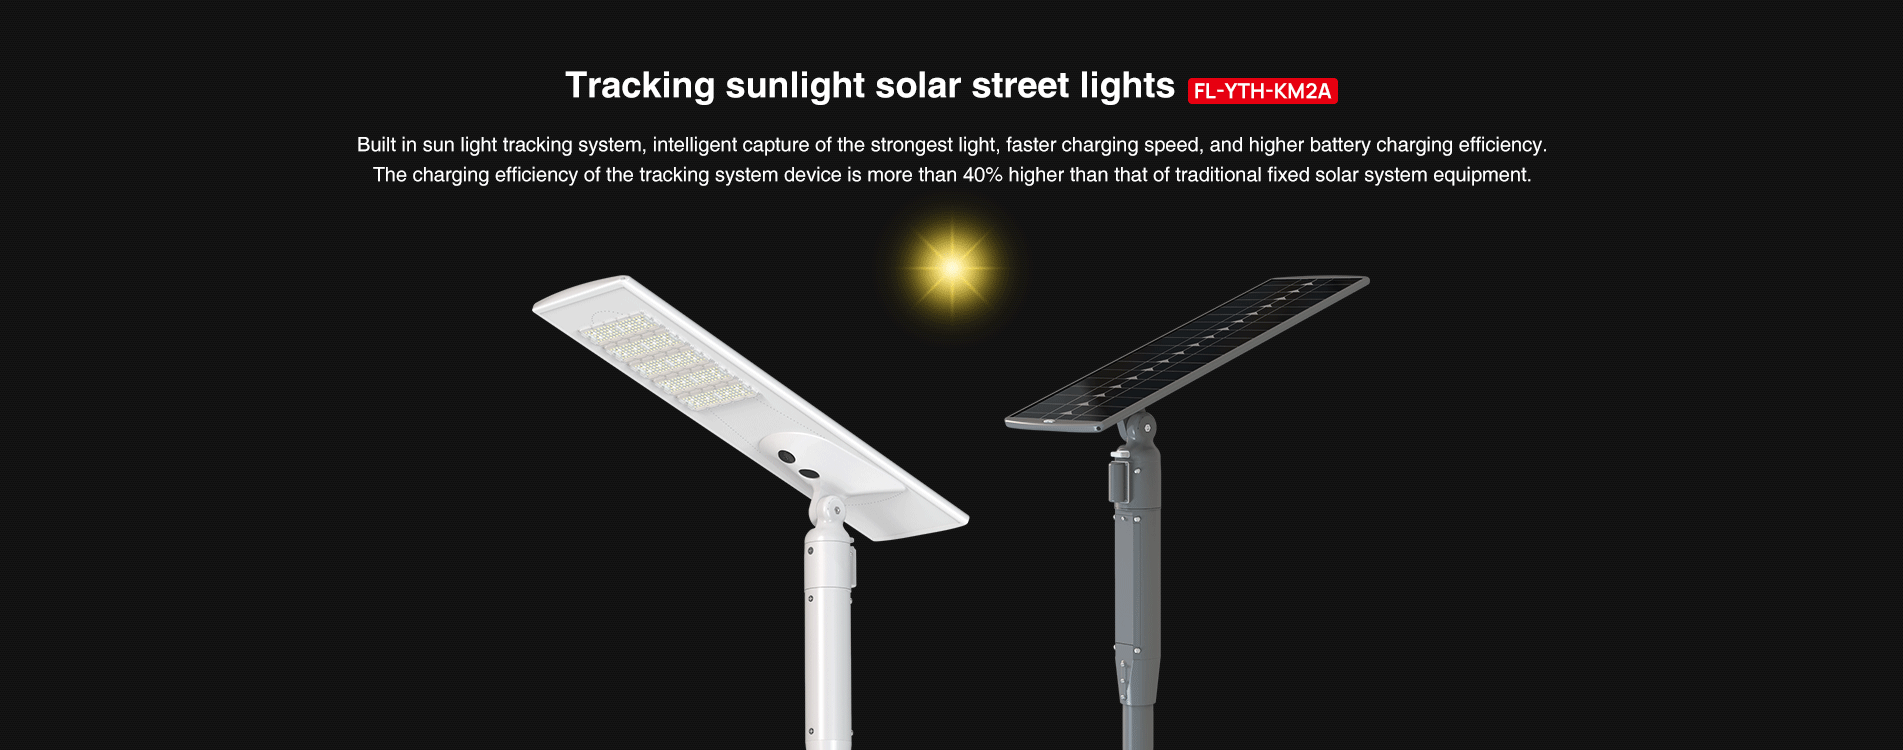 FL-YTH-KM2A Tracking sunlight solar street lights